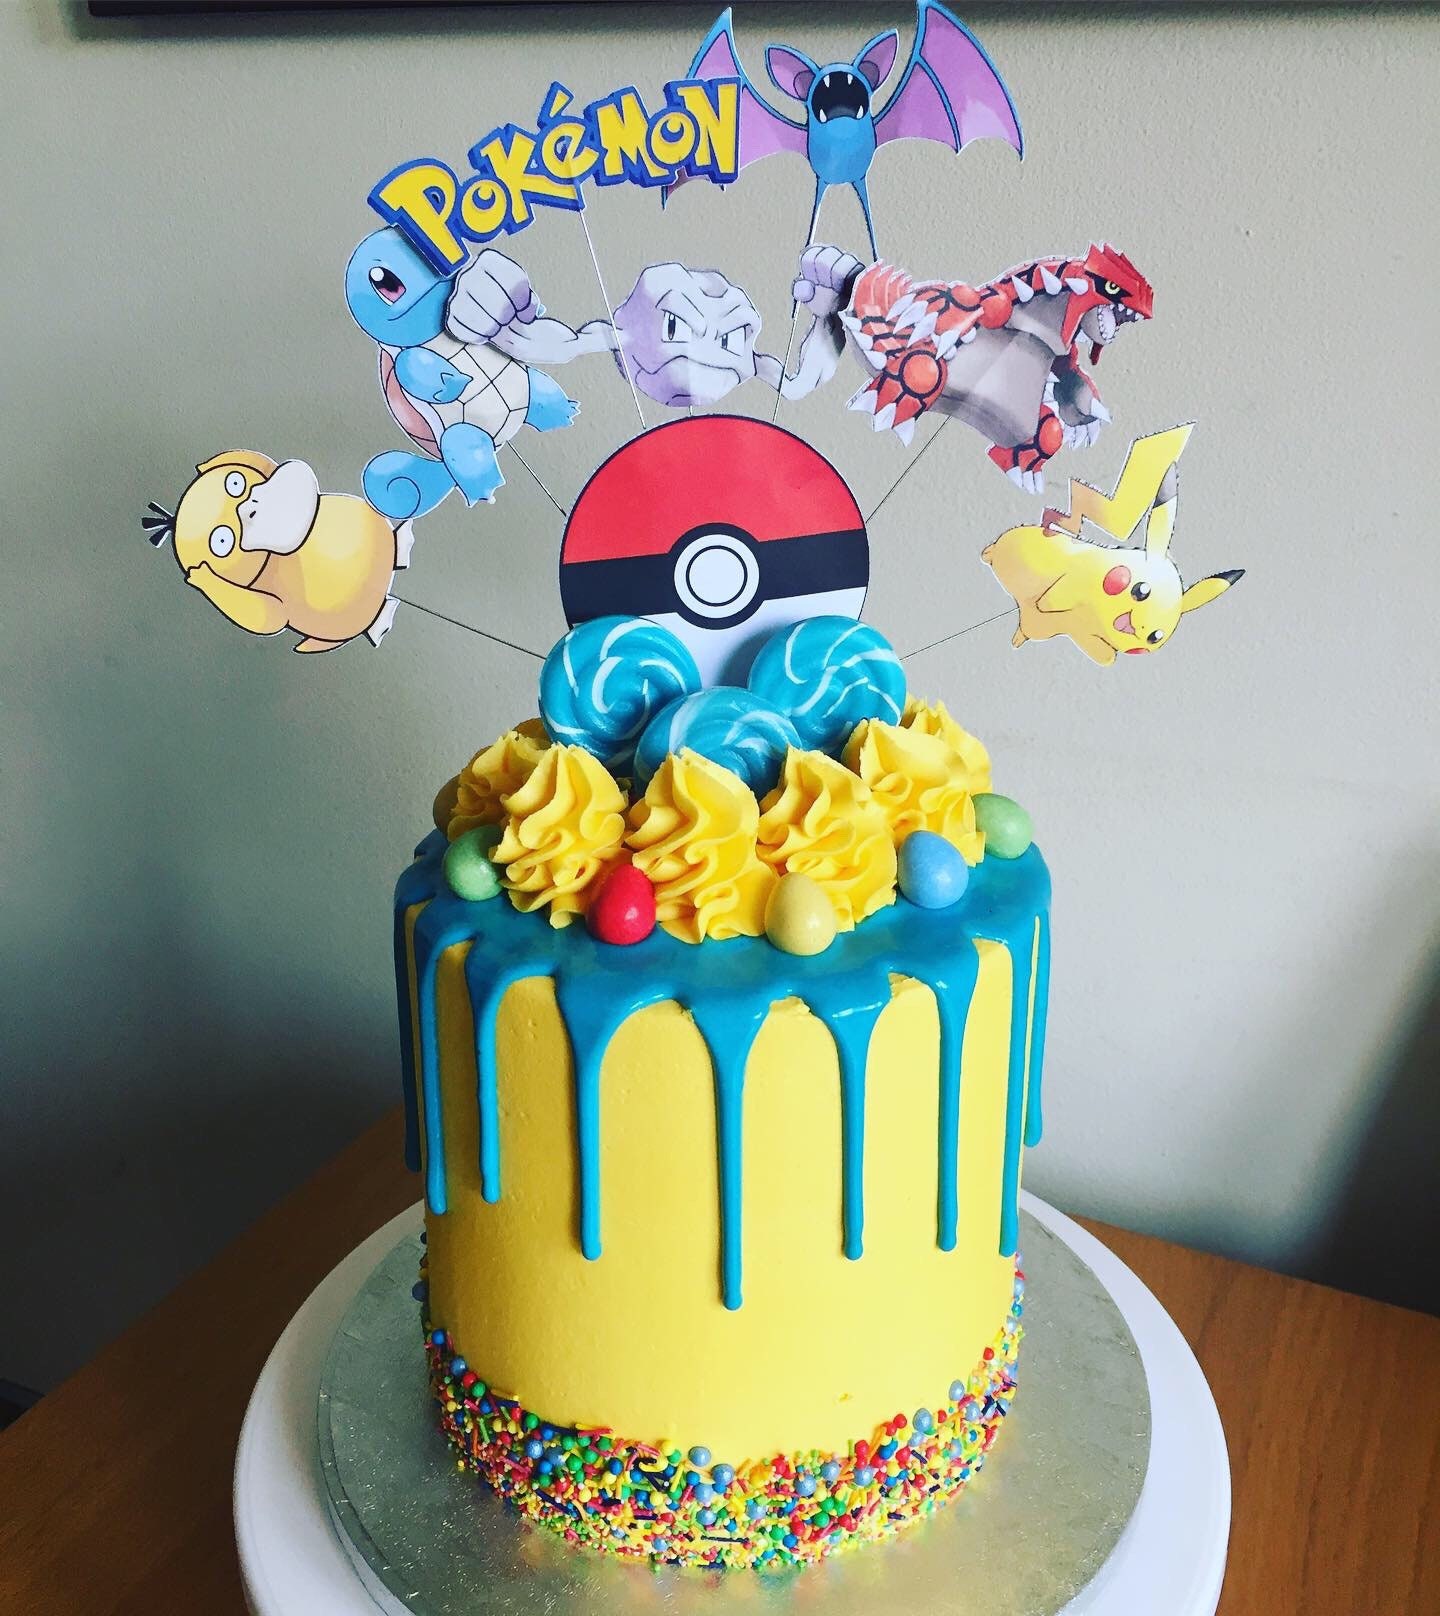 Cake Topper Birthday Pokemon personalised Rice paper,Icing fondant Sheets 818